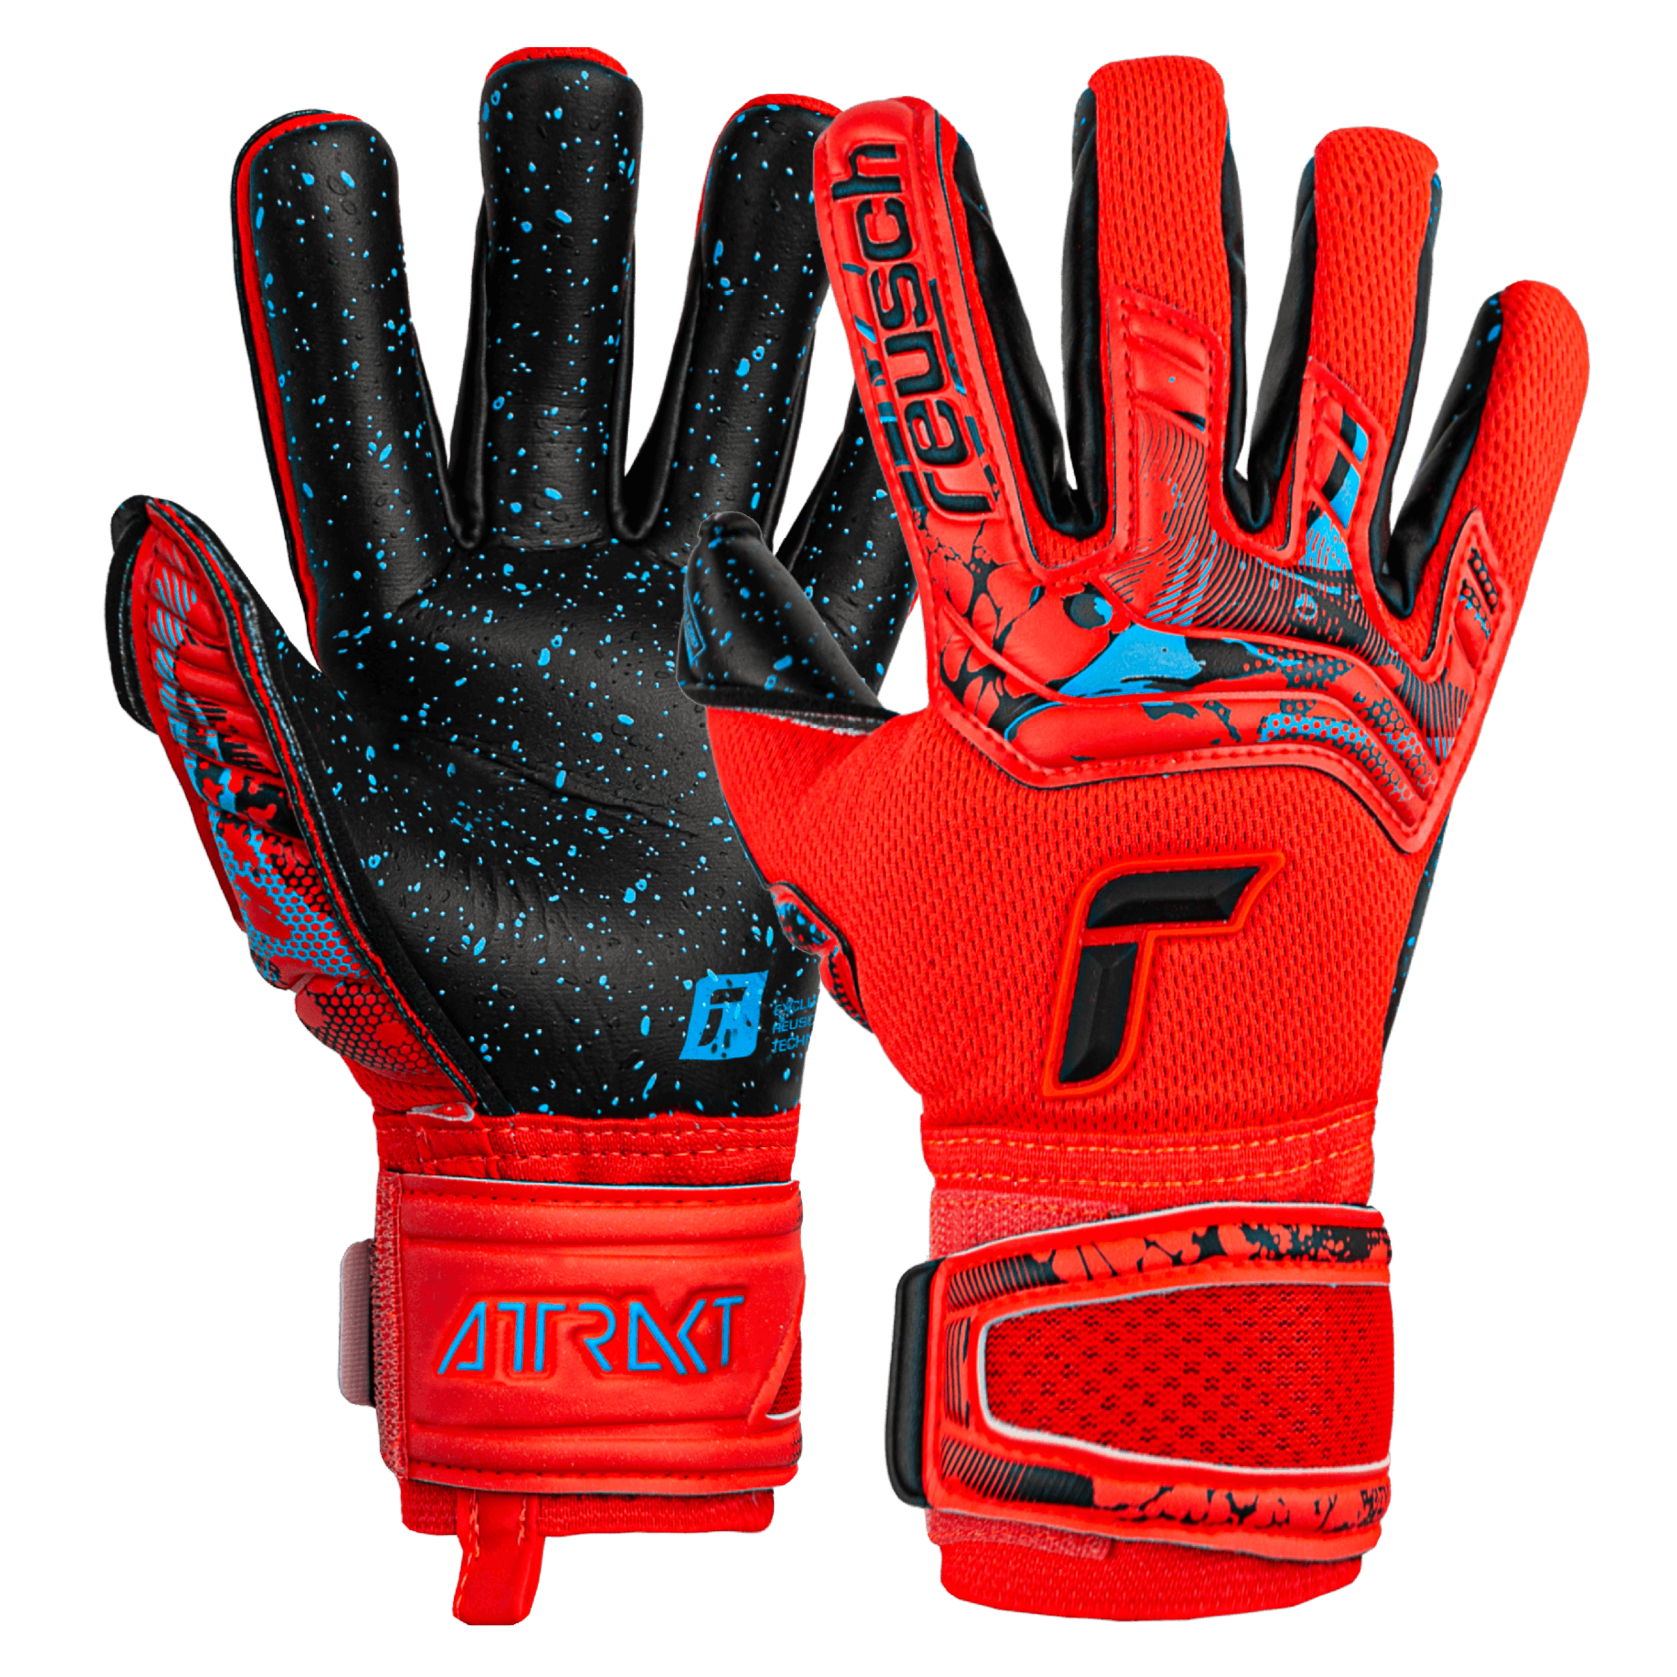 Adidas x Pro Goalkeeper Gloves - Black-Blue Rush, 8